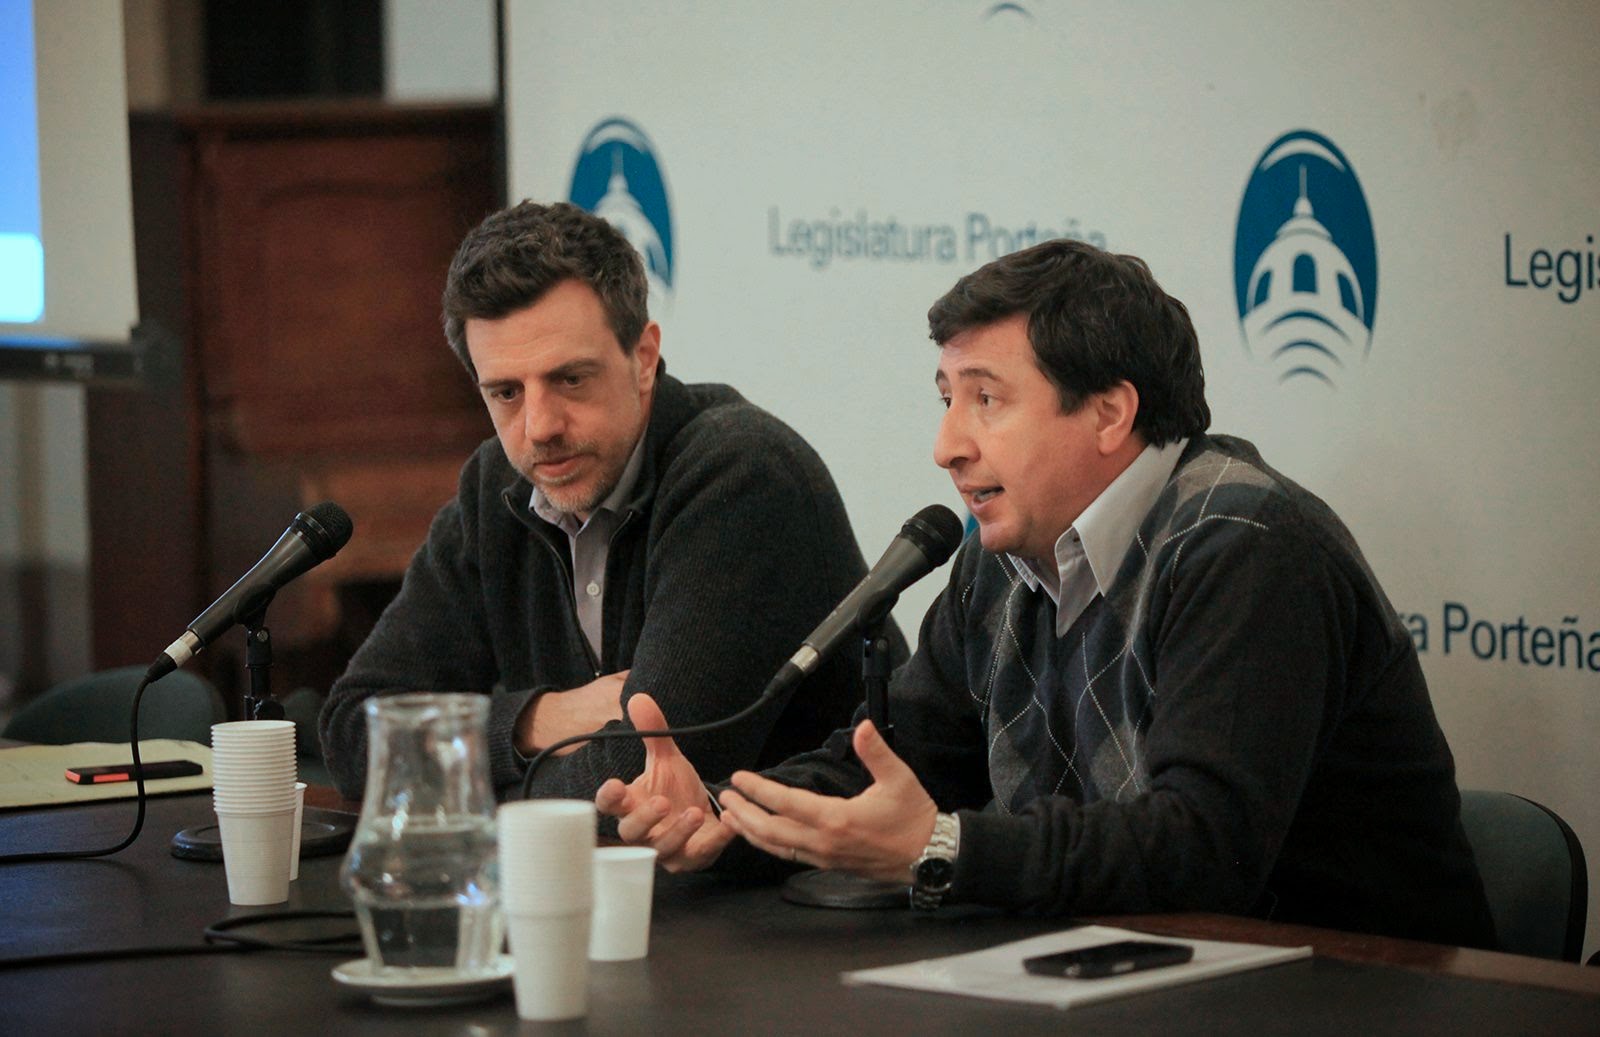 Diego_Kravetz-Legislatura_Porteña_IPP